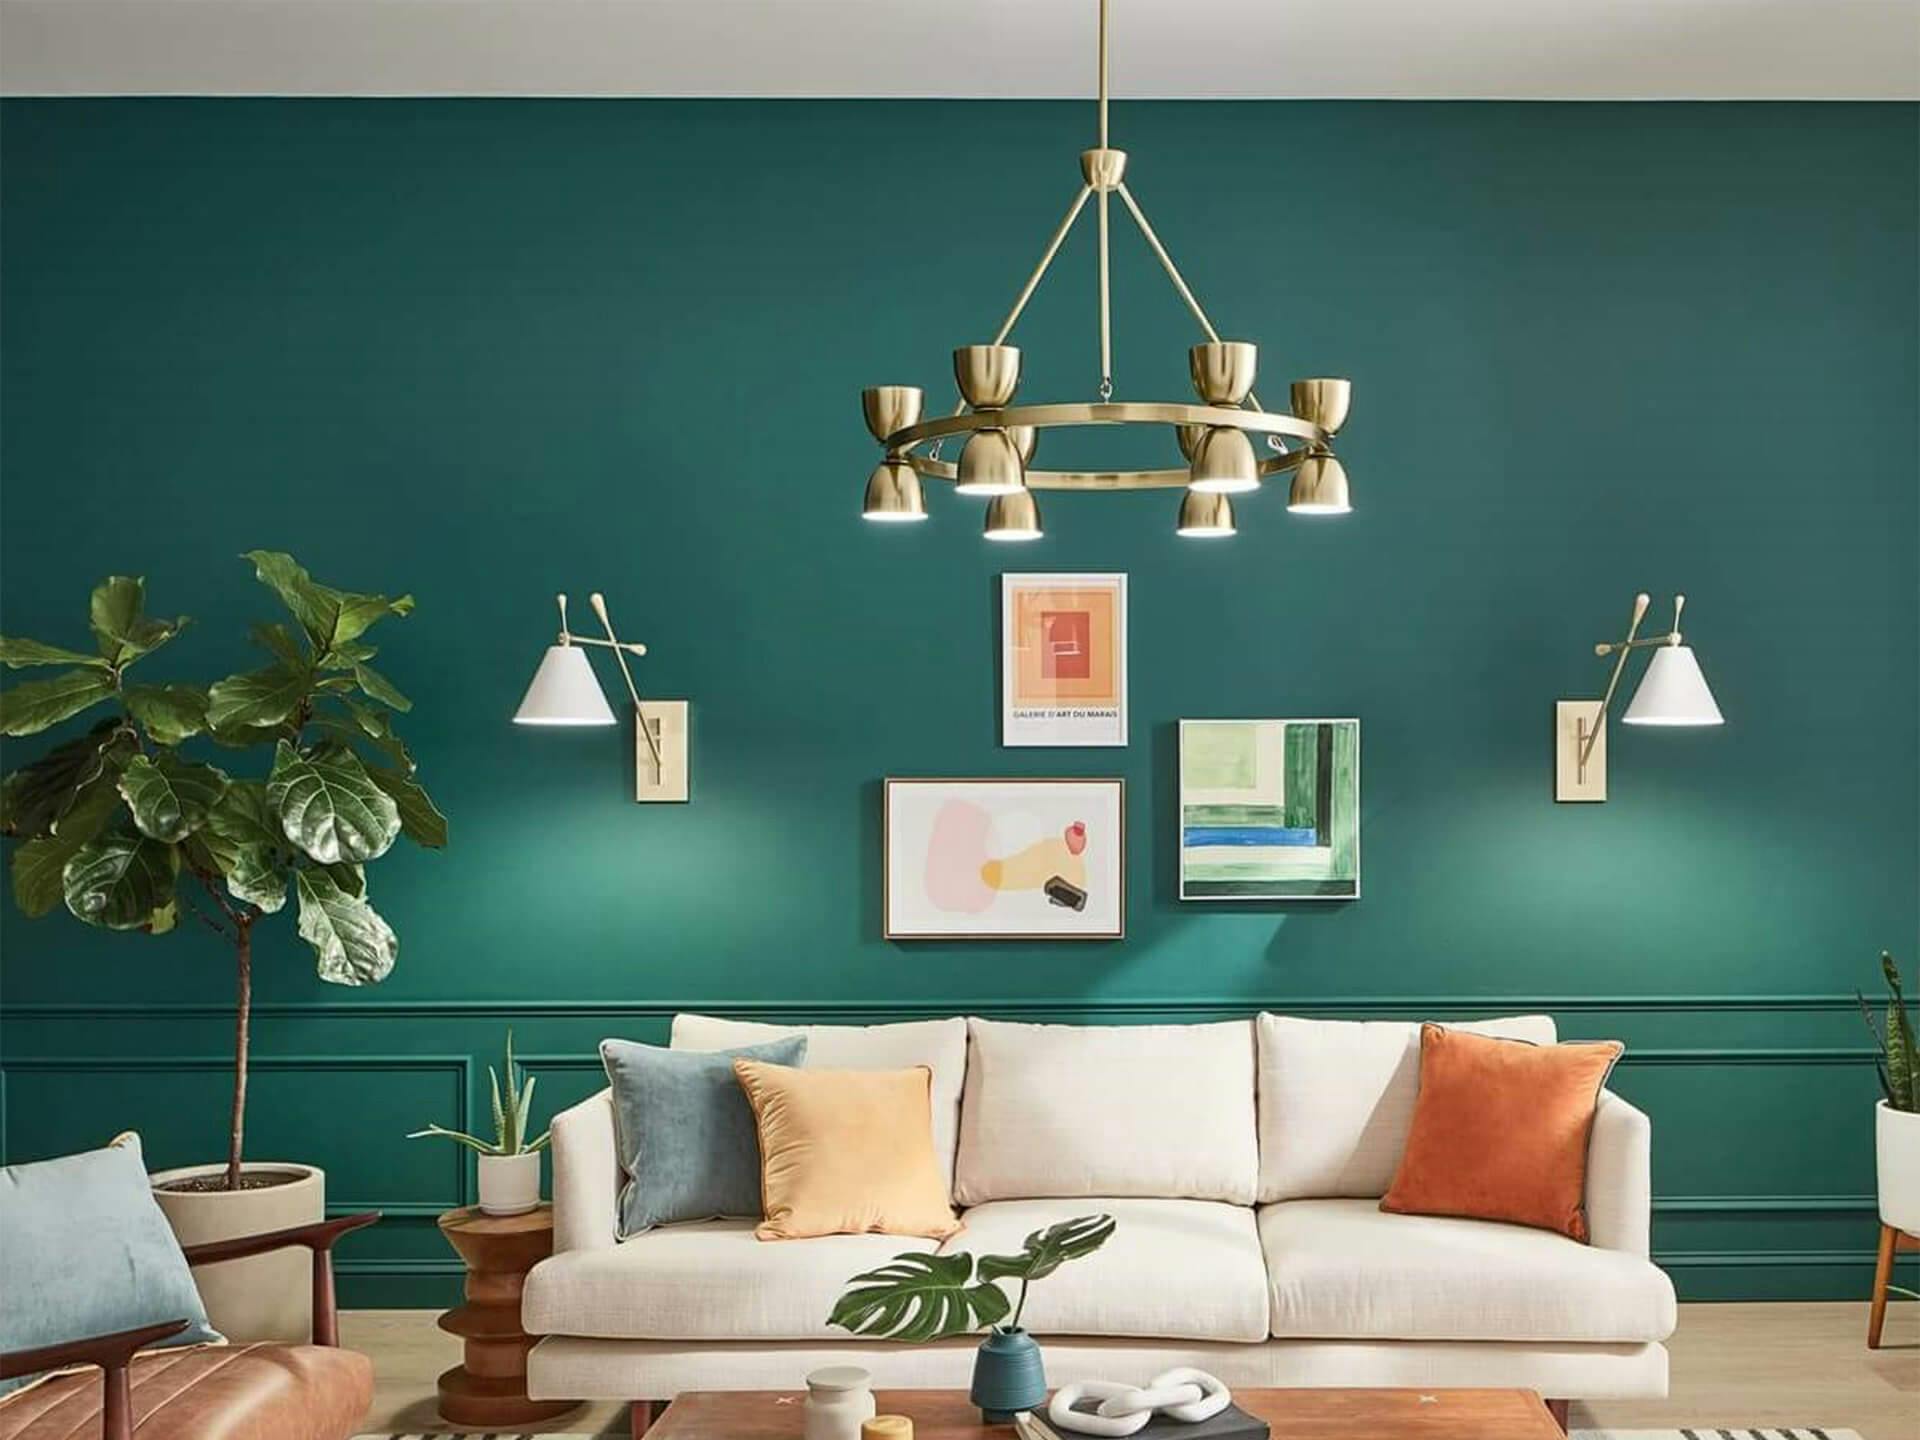 Baland LED 12 light Chandelier hanging in green living room